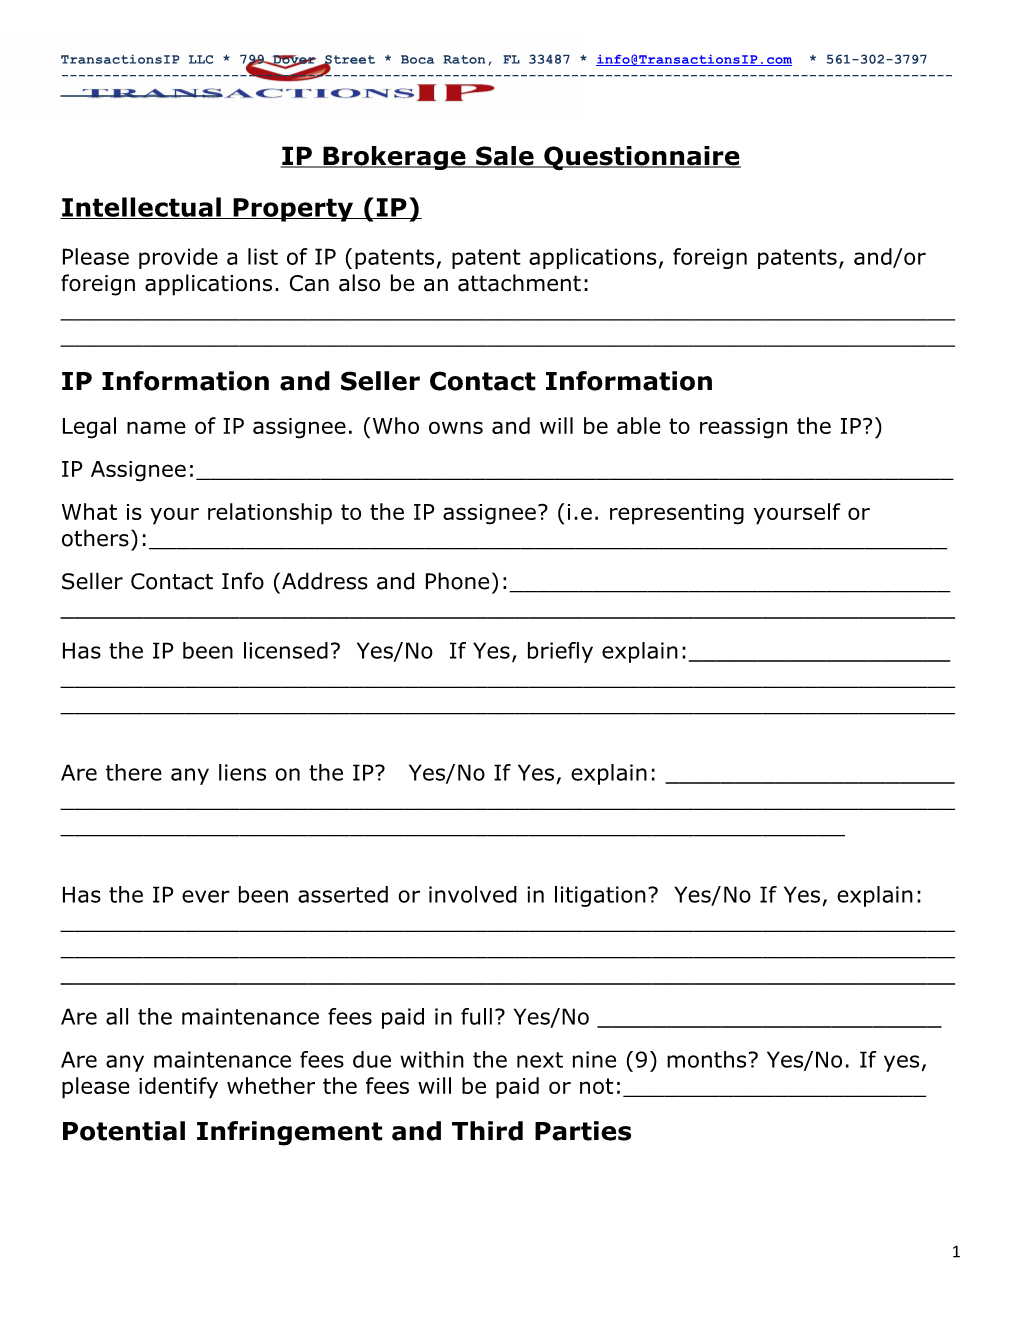 IP Brokerage Sale Questionnaire